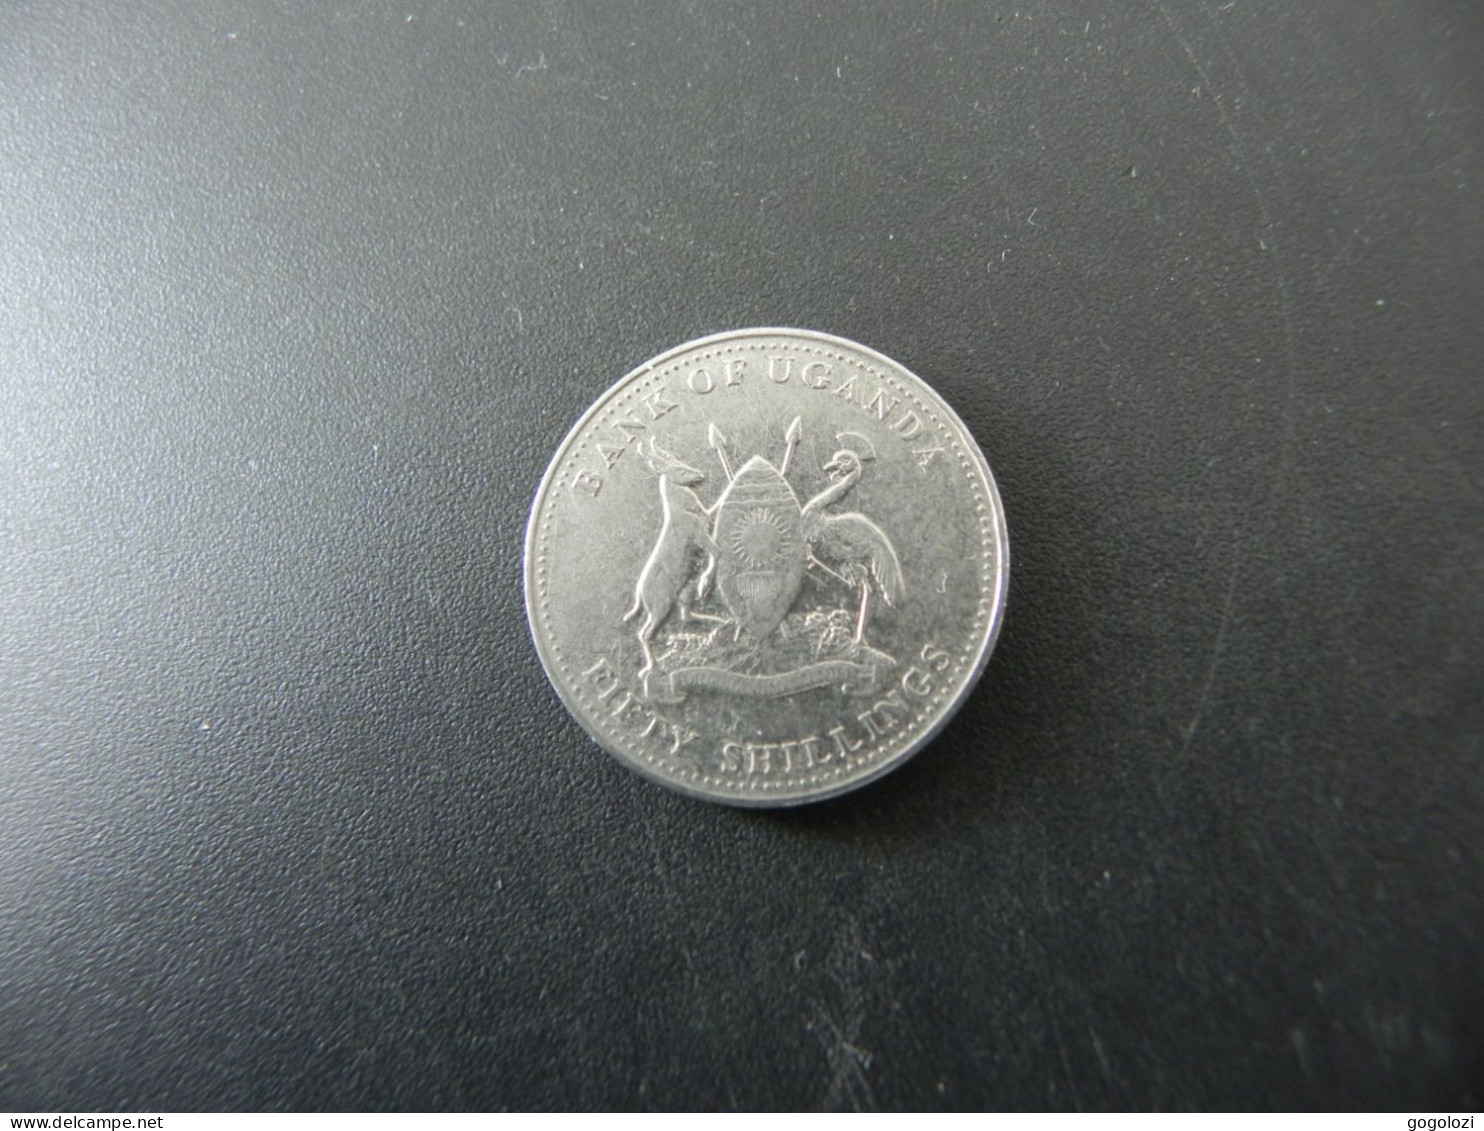 Uganda 50 Shillings 1998 - Oeganda